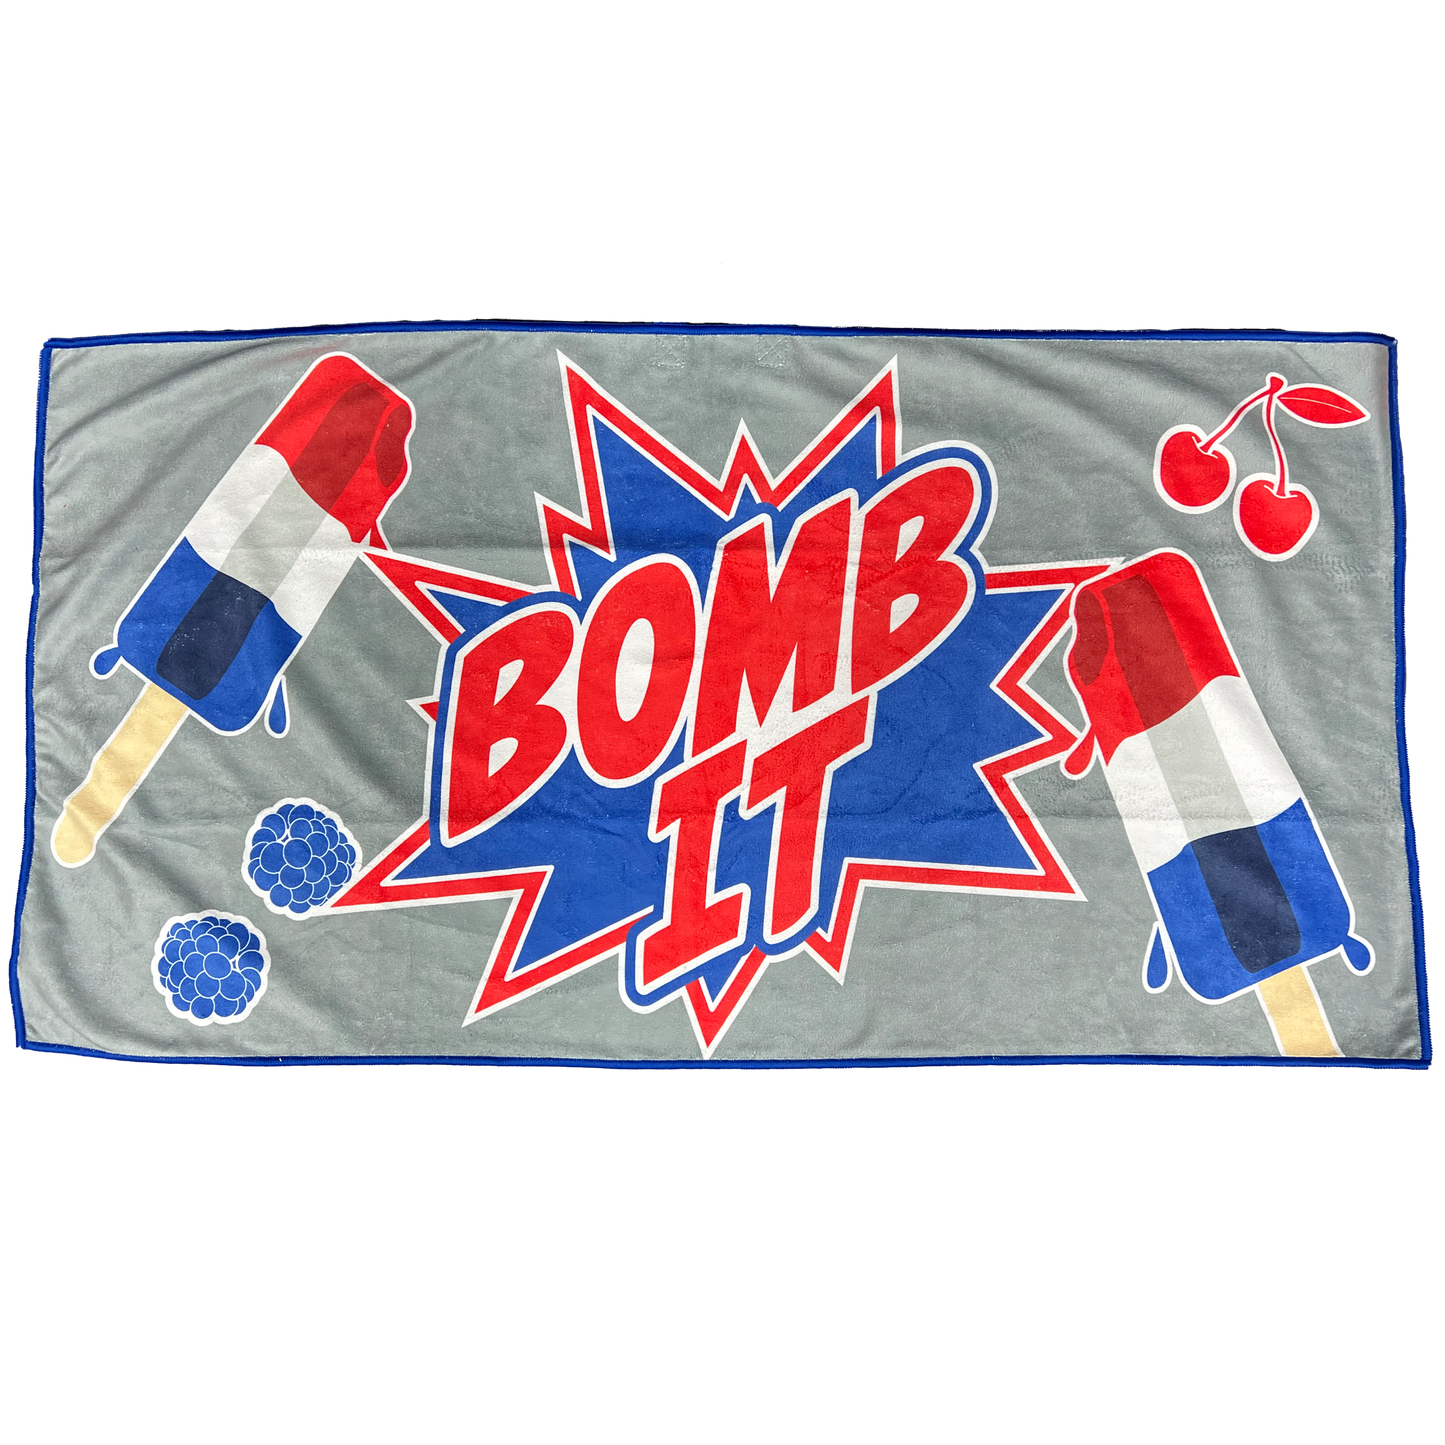 New Bomb It Player's Towel